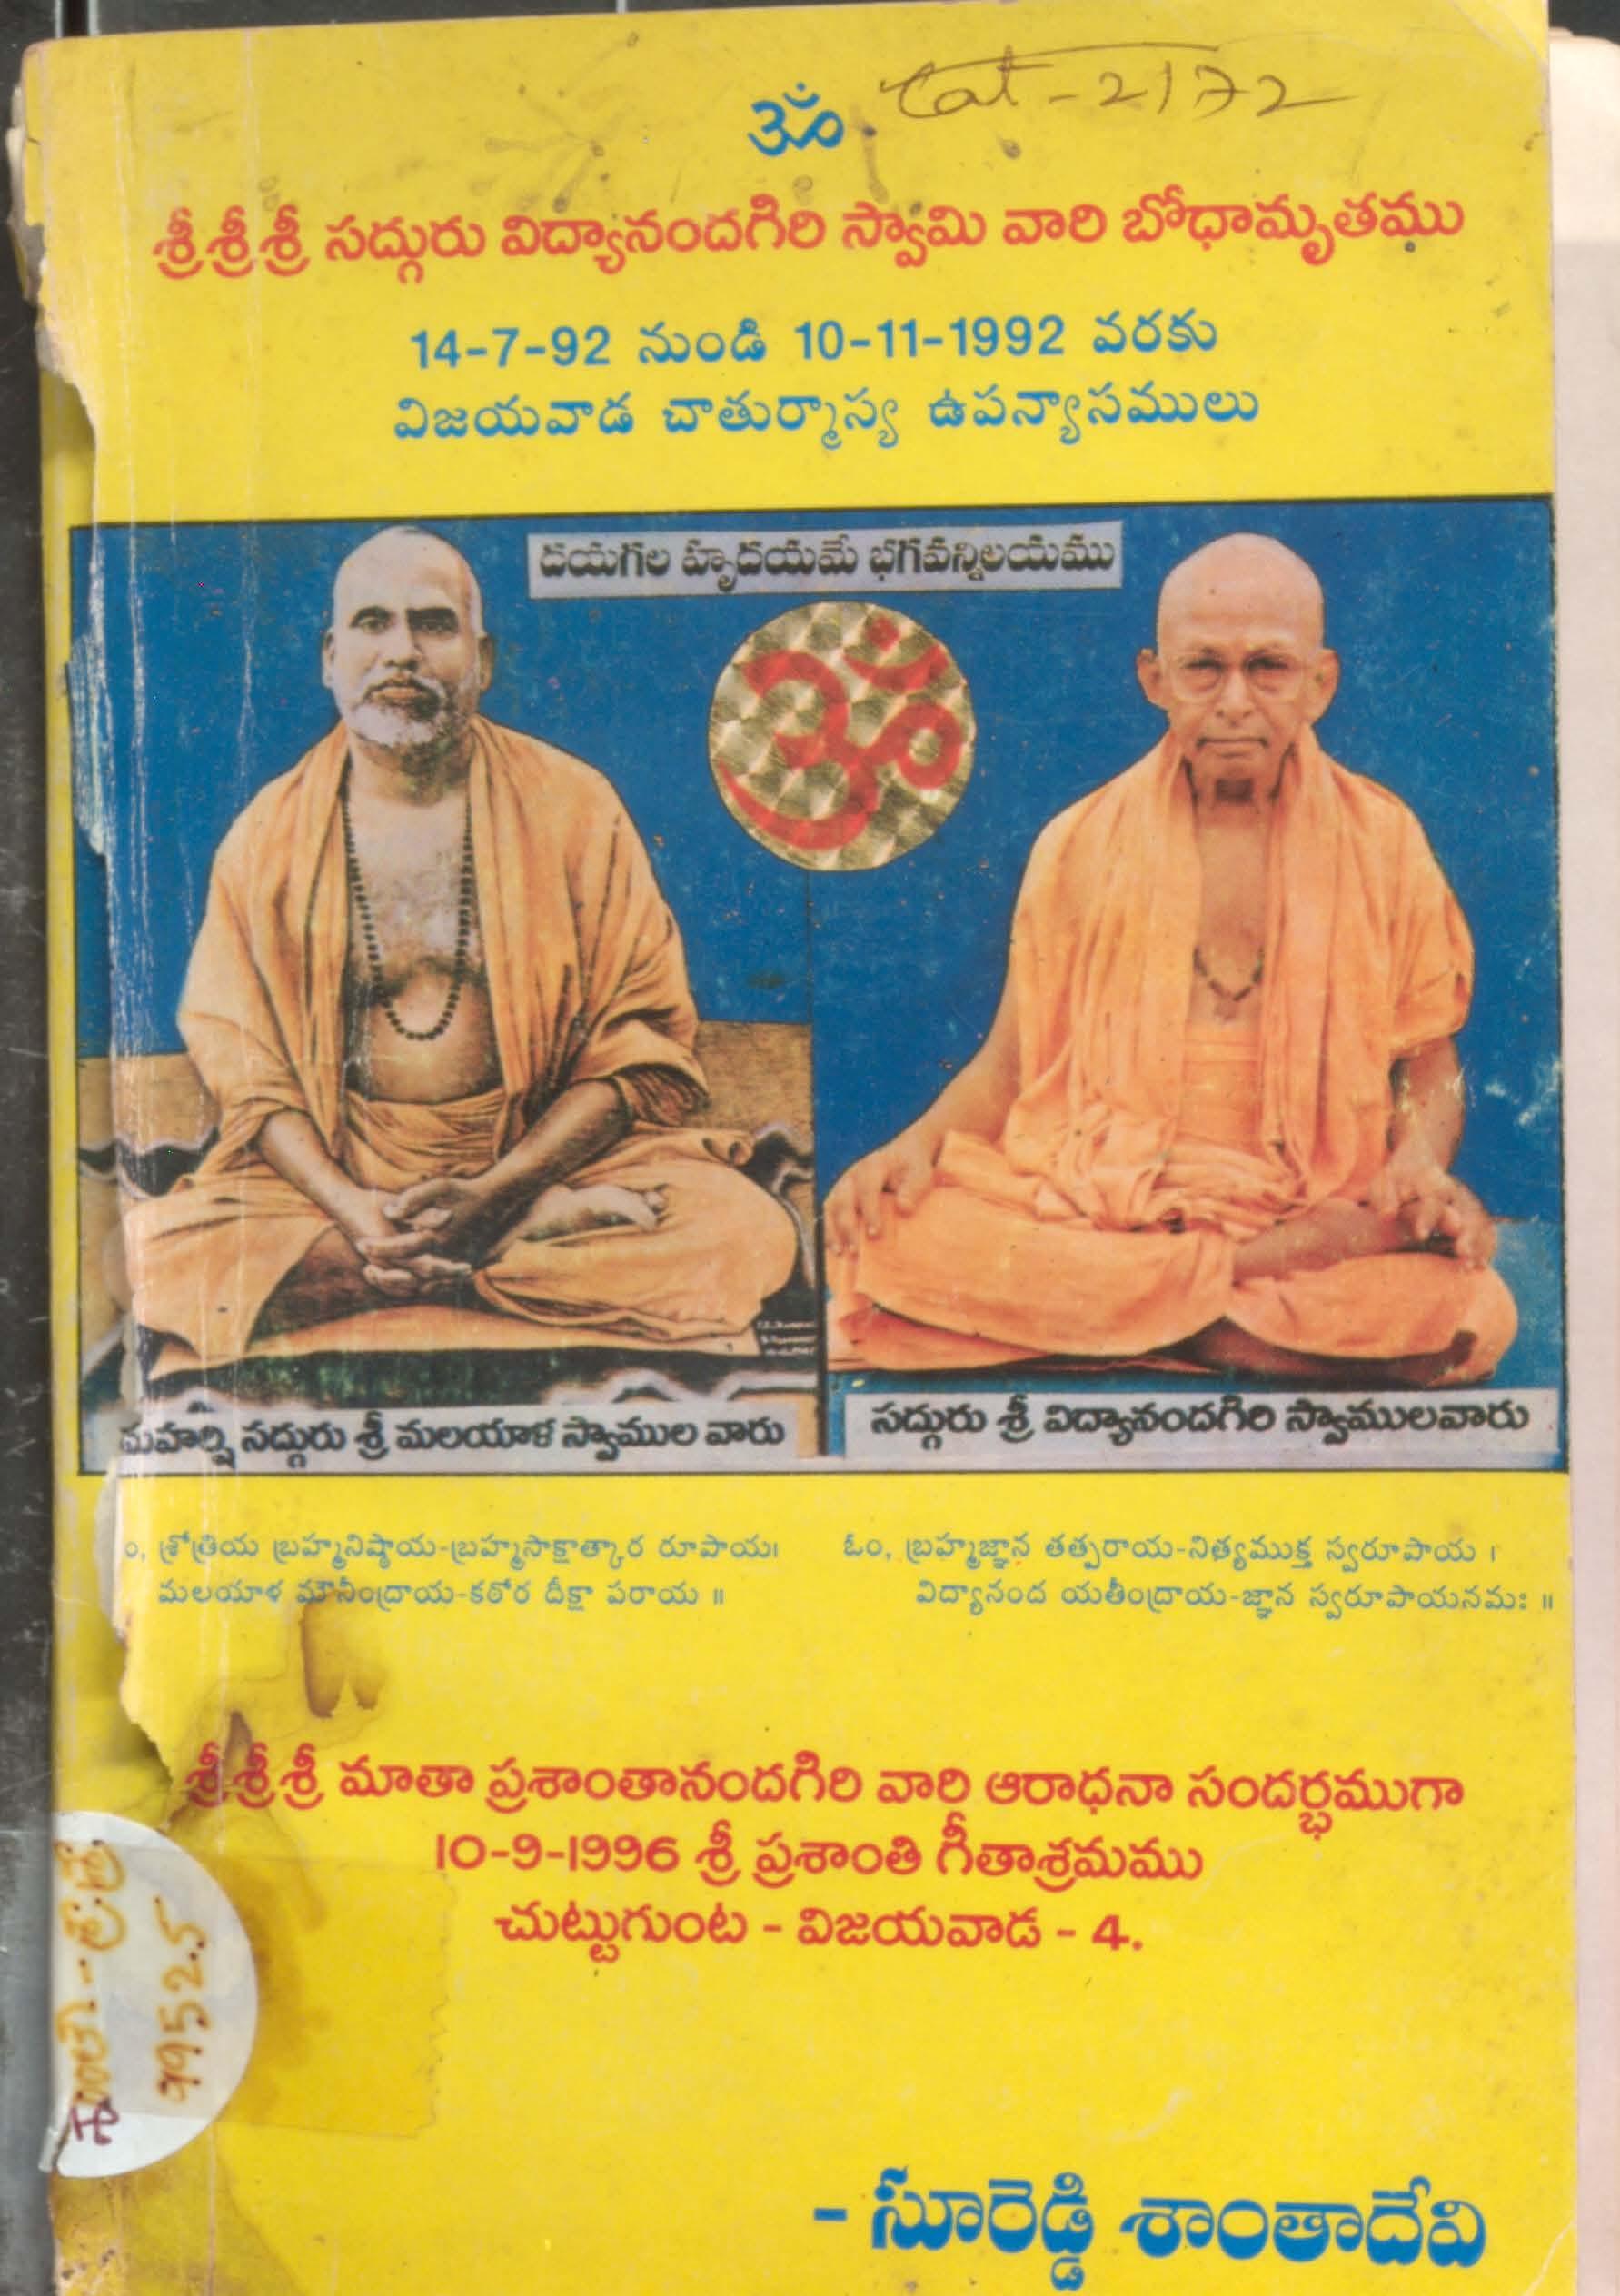 Sri Sri Sri Sadhguru Vidhyanandhagiri Swami